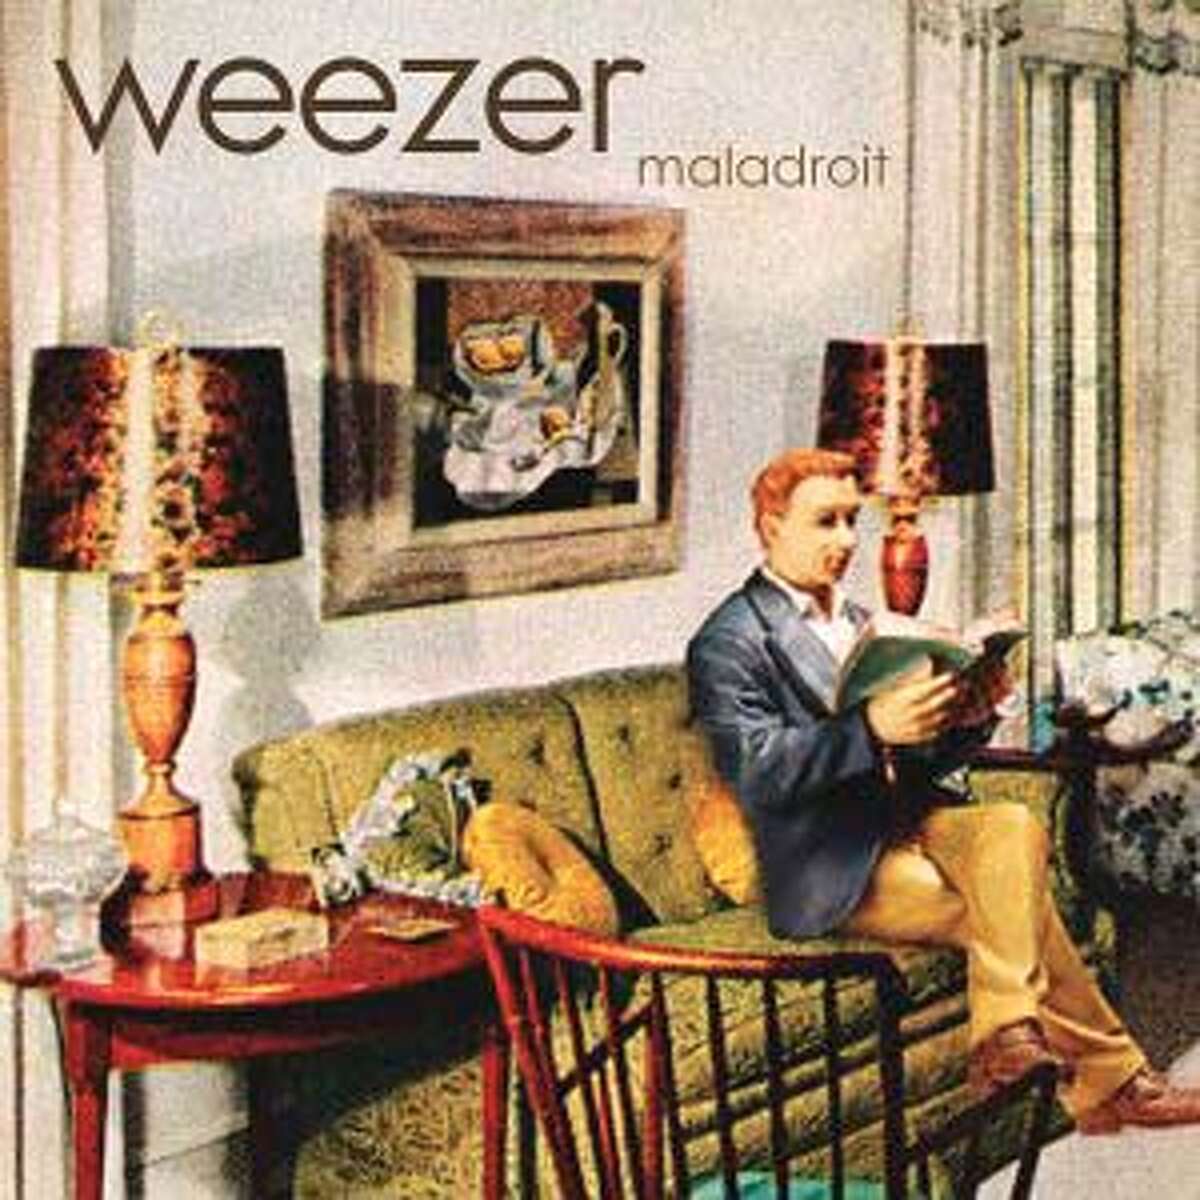 "Maladroit" -- Weezer